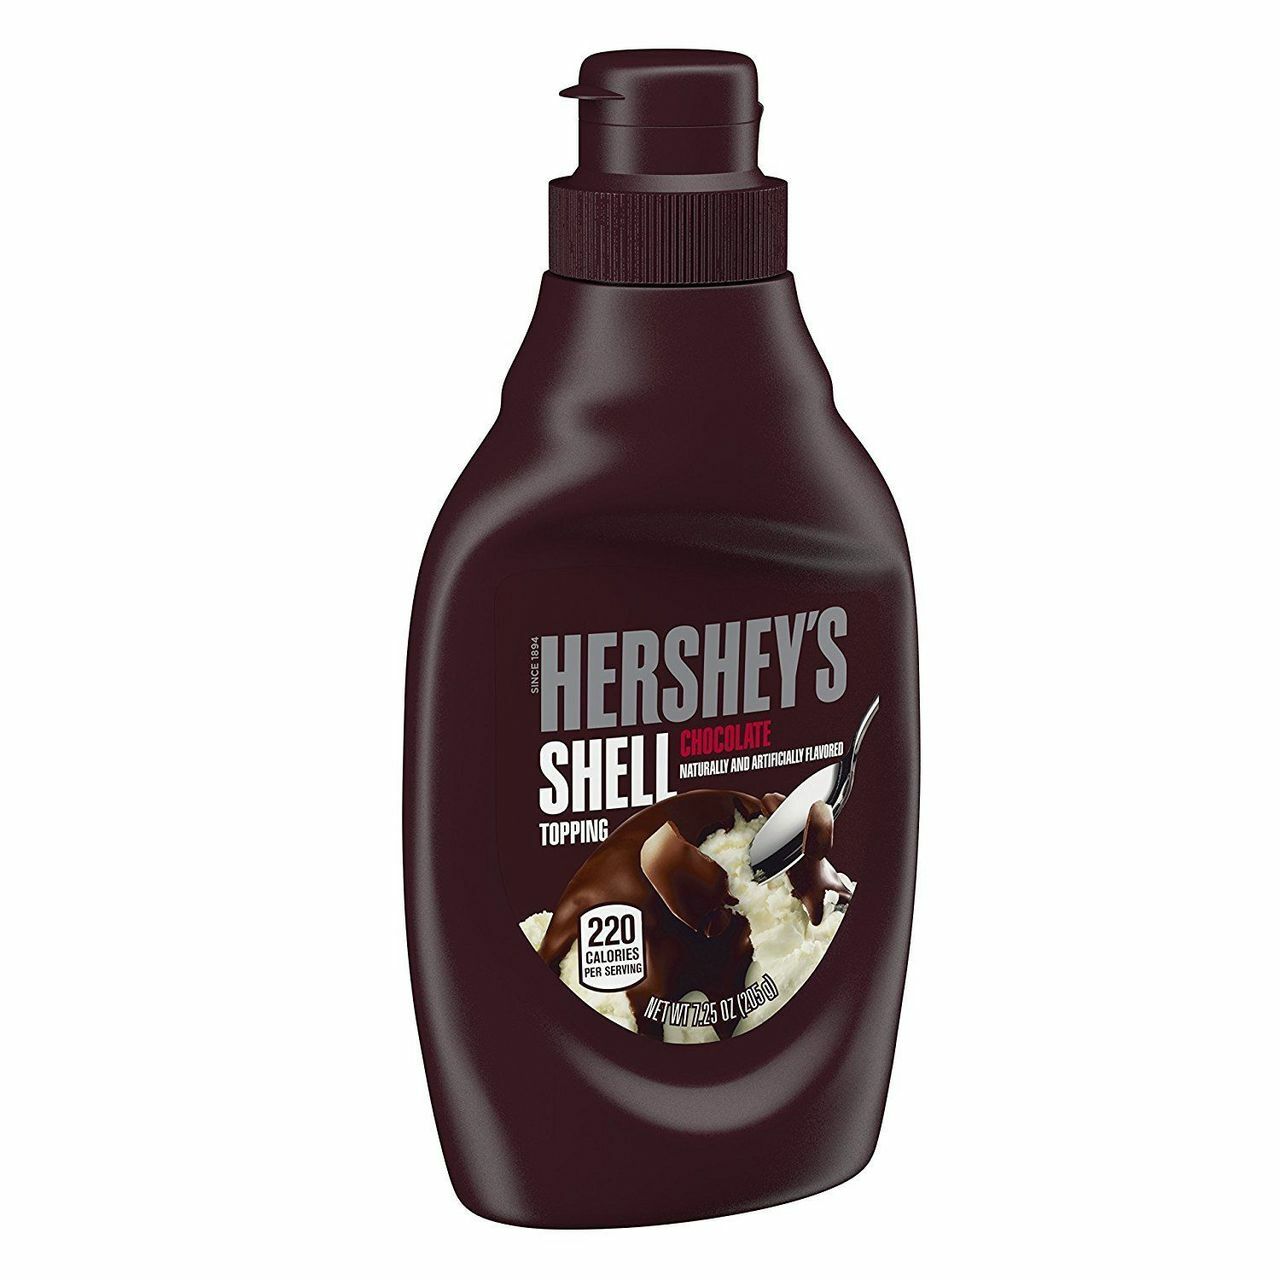 HERSHEY'S Chocolate Shell Topping sauce